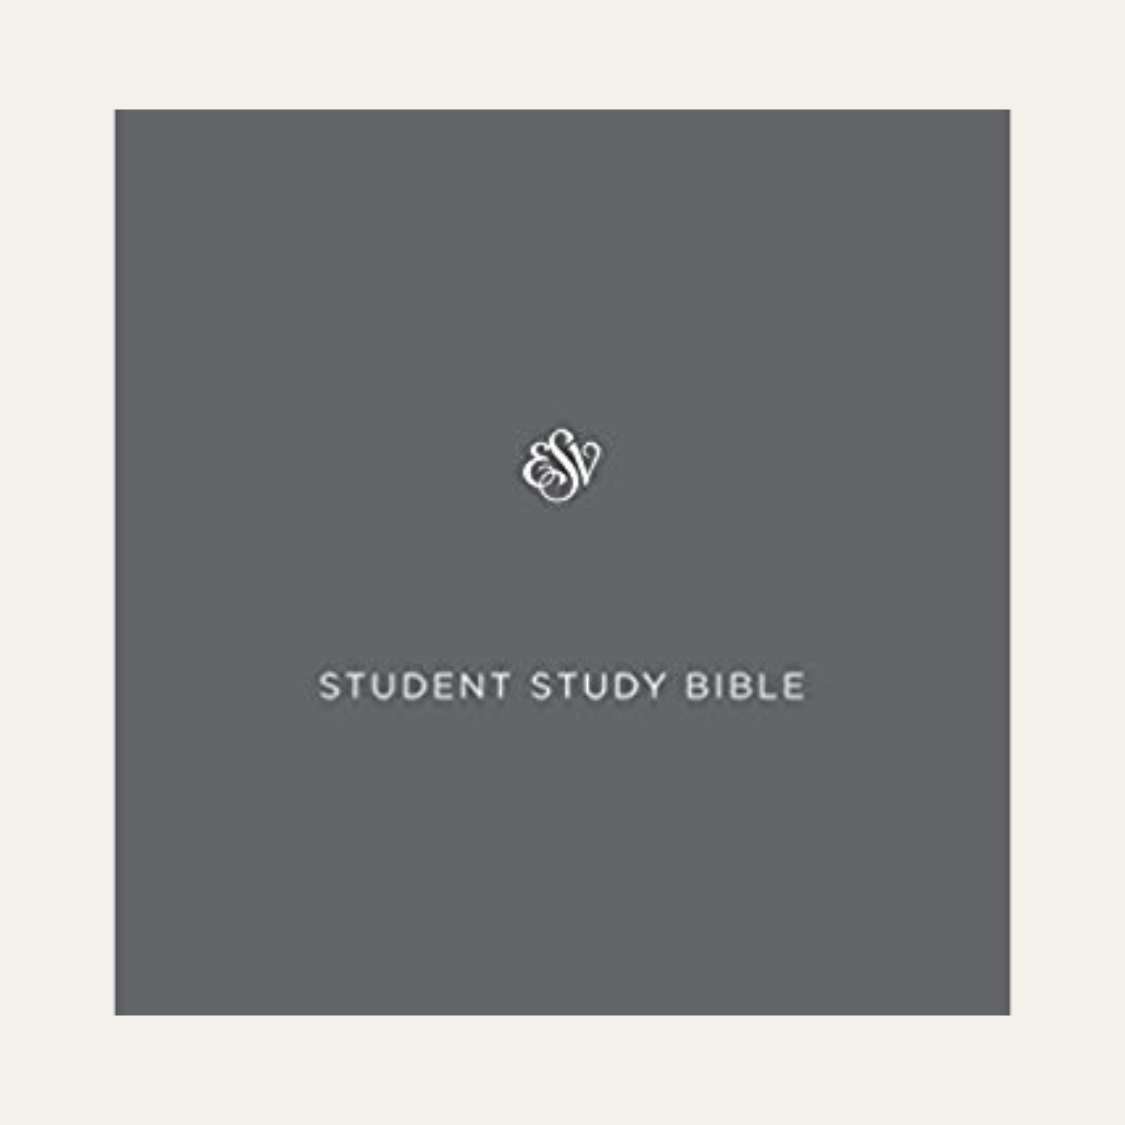 ESV Student Study Bible.png